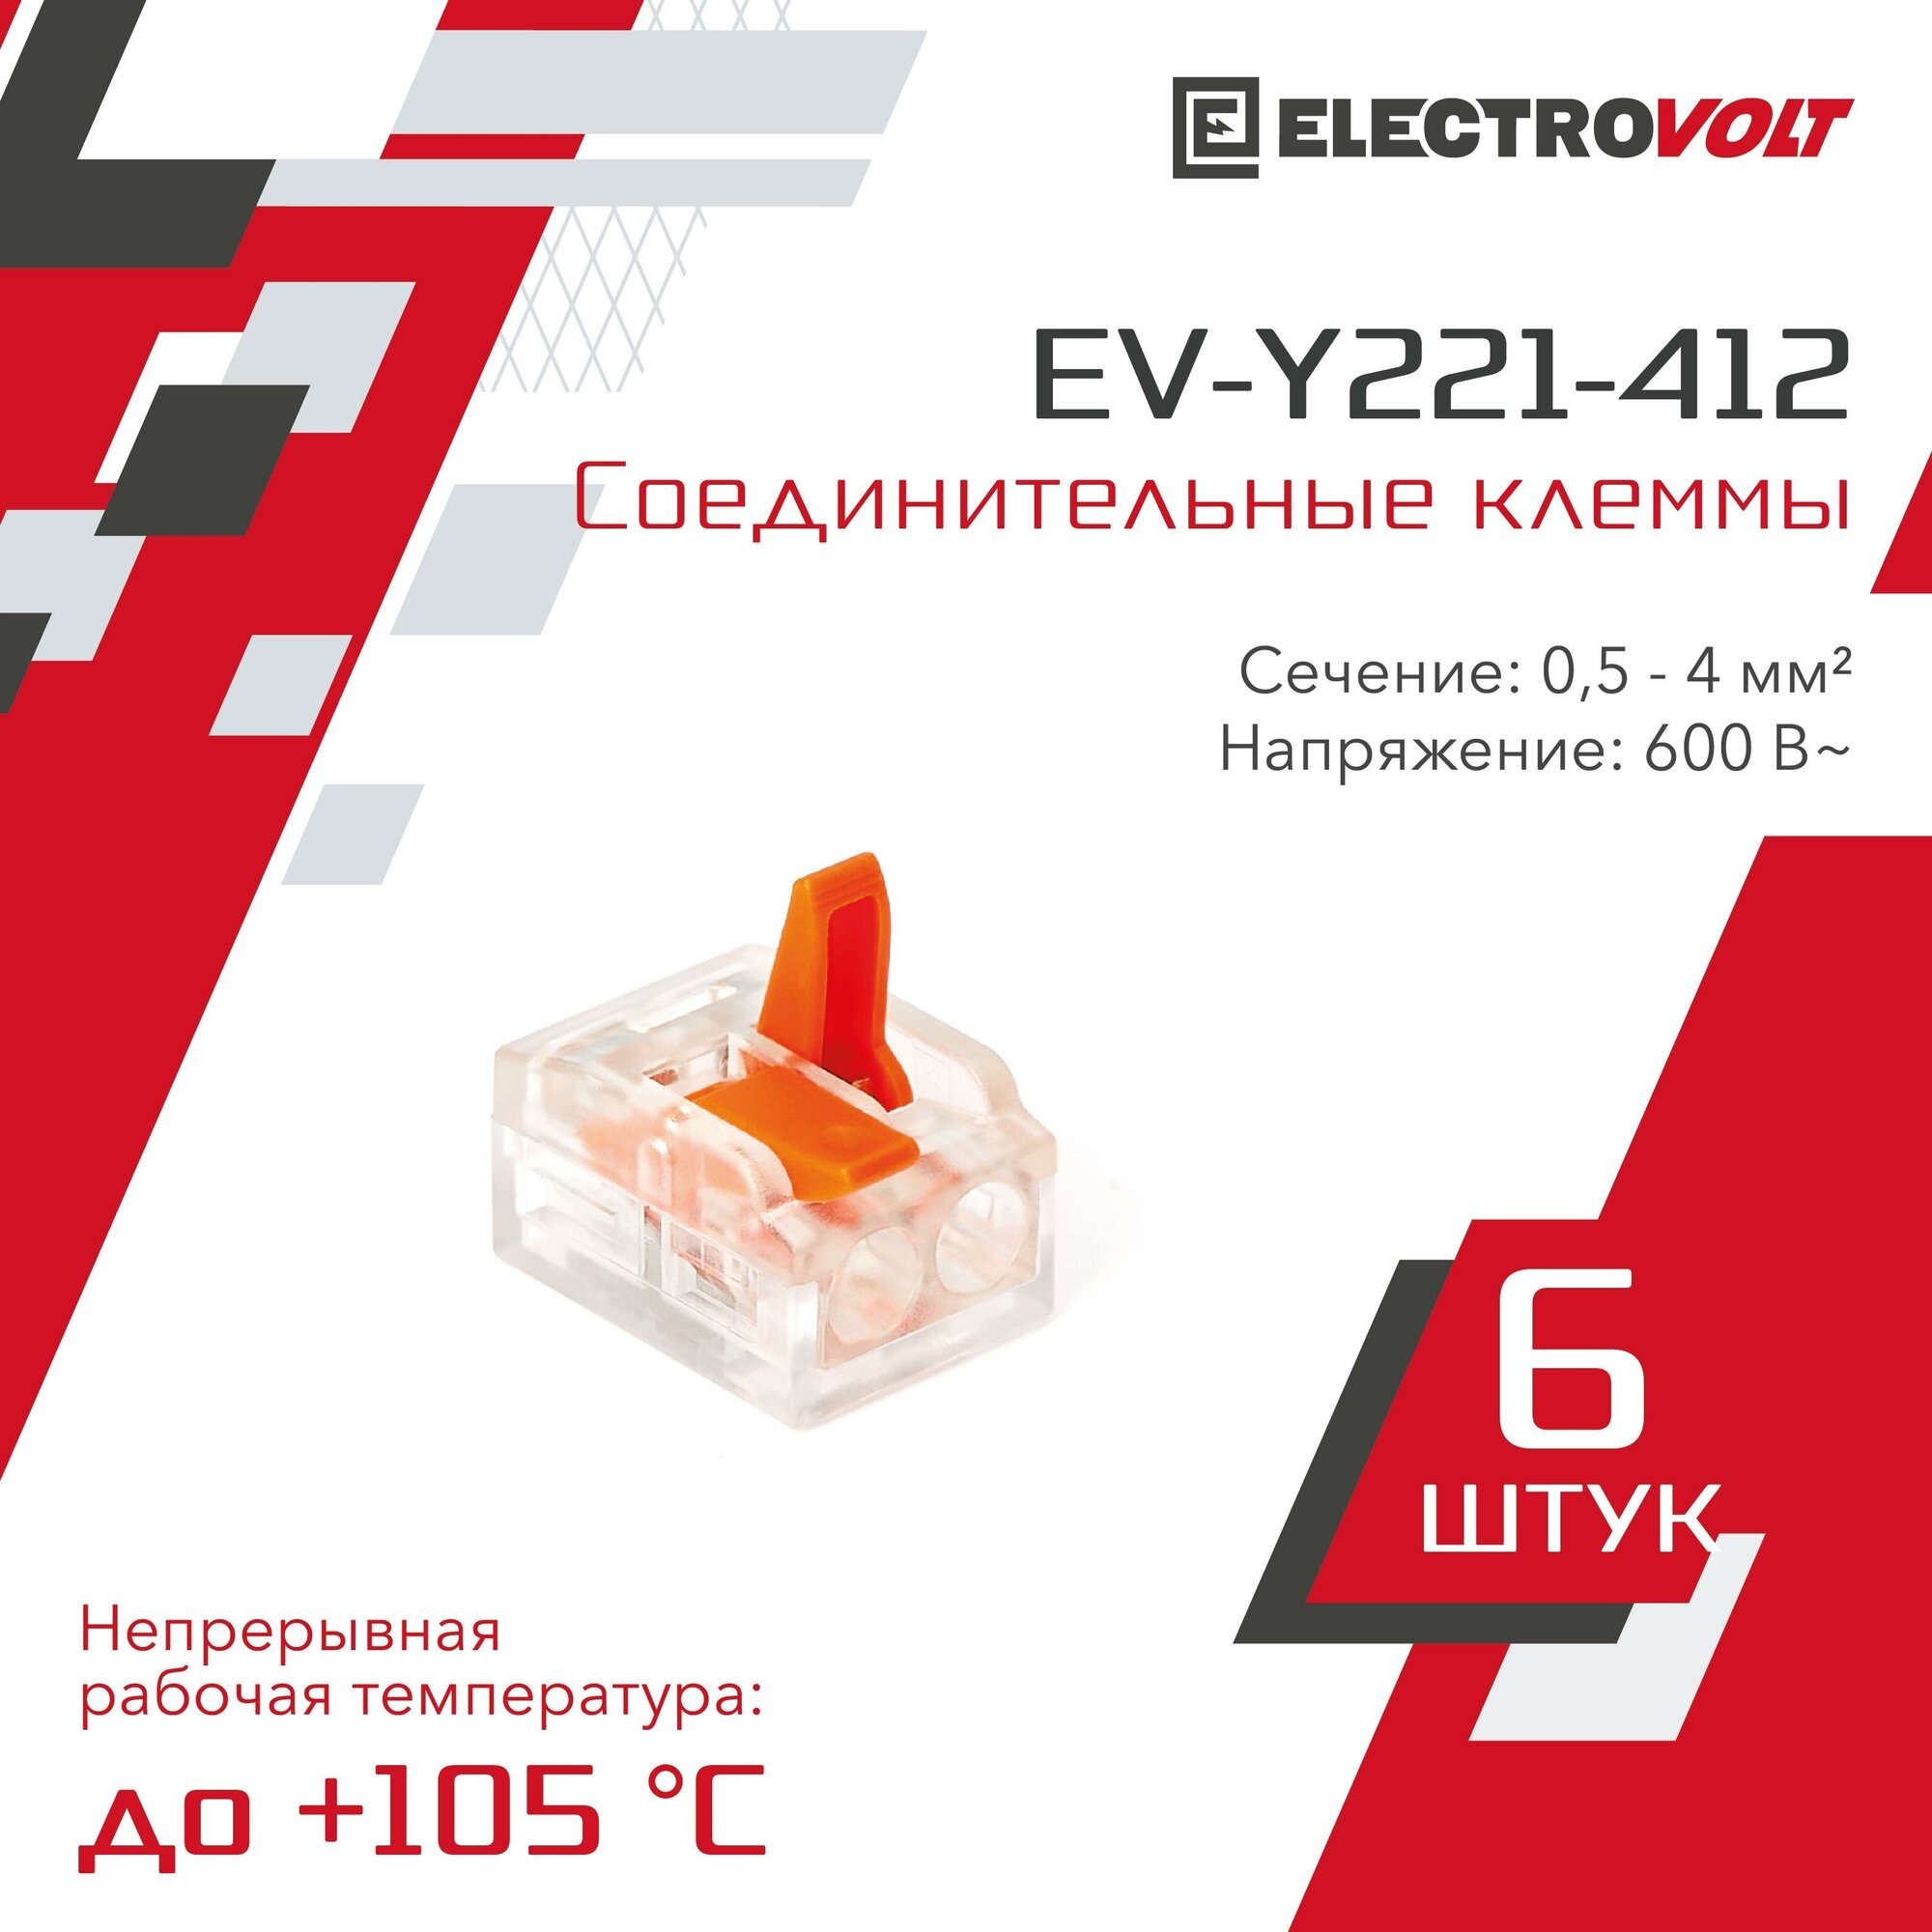 Универсальная 2-х проводная клемма ELECTROVOLT (EV-Y221-412) 6 шт/уп